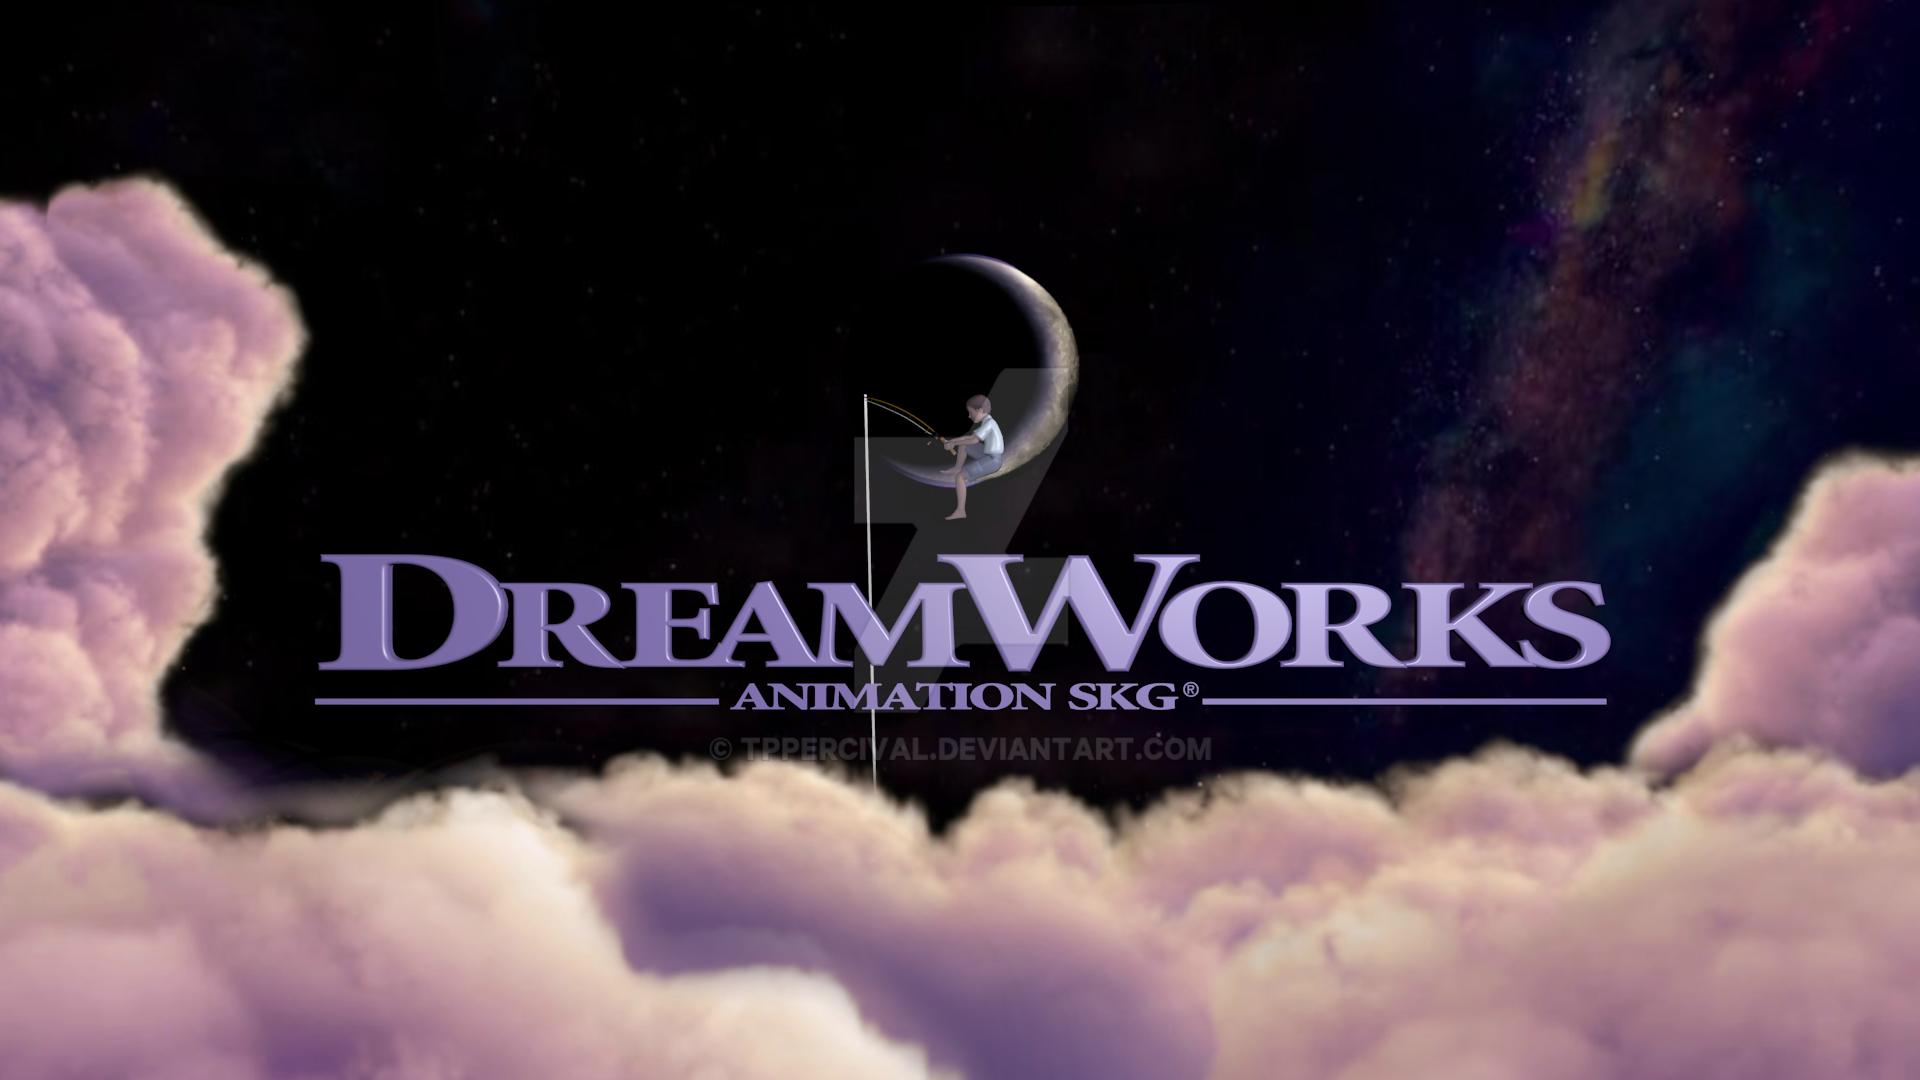 DreamWorks Animation SKG (2010) Logo Remake by TPPercival on DeviantArt